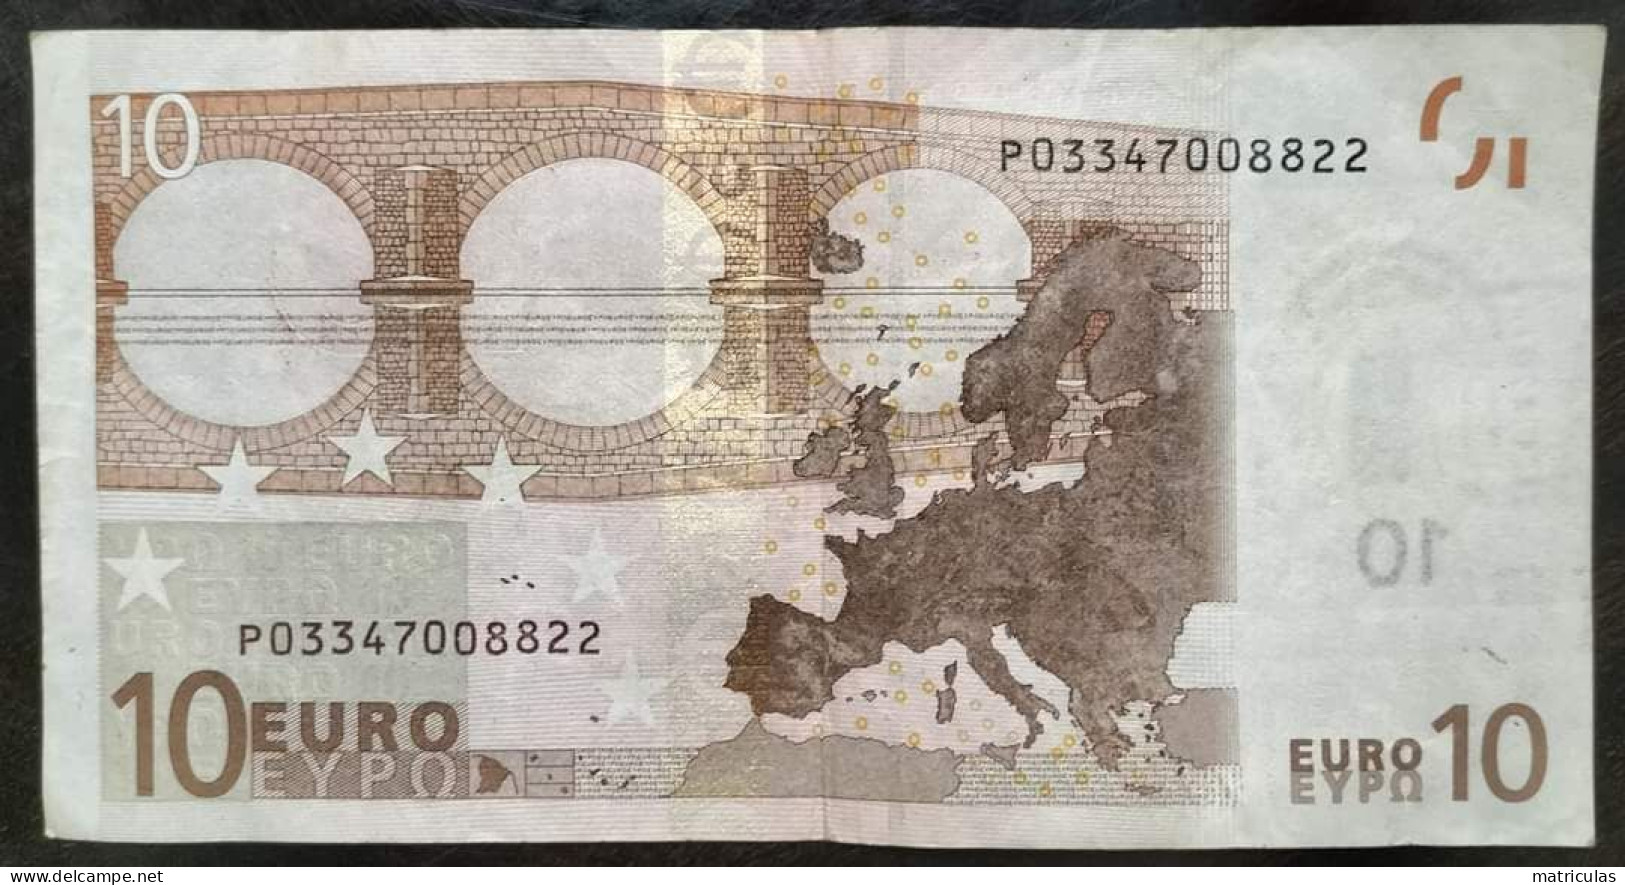 BANKNOTE OF 10€ HOLAND 1ST SÉRIE CODE P015 VERY RARE VALUE 1100€ - 10 Euro